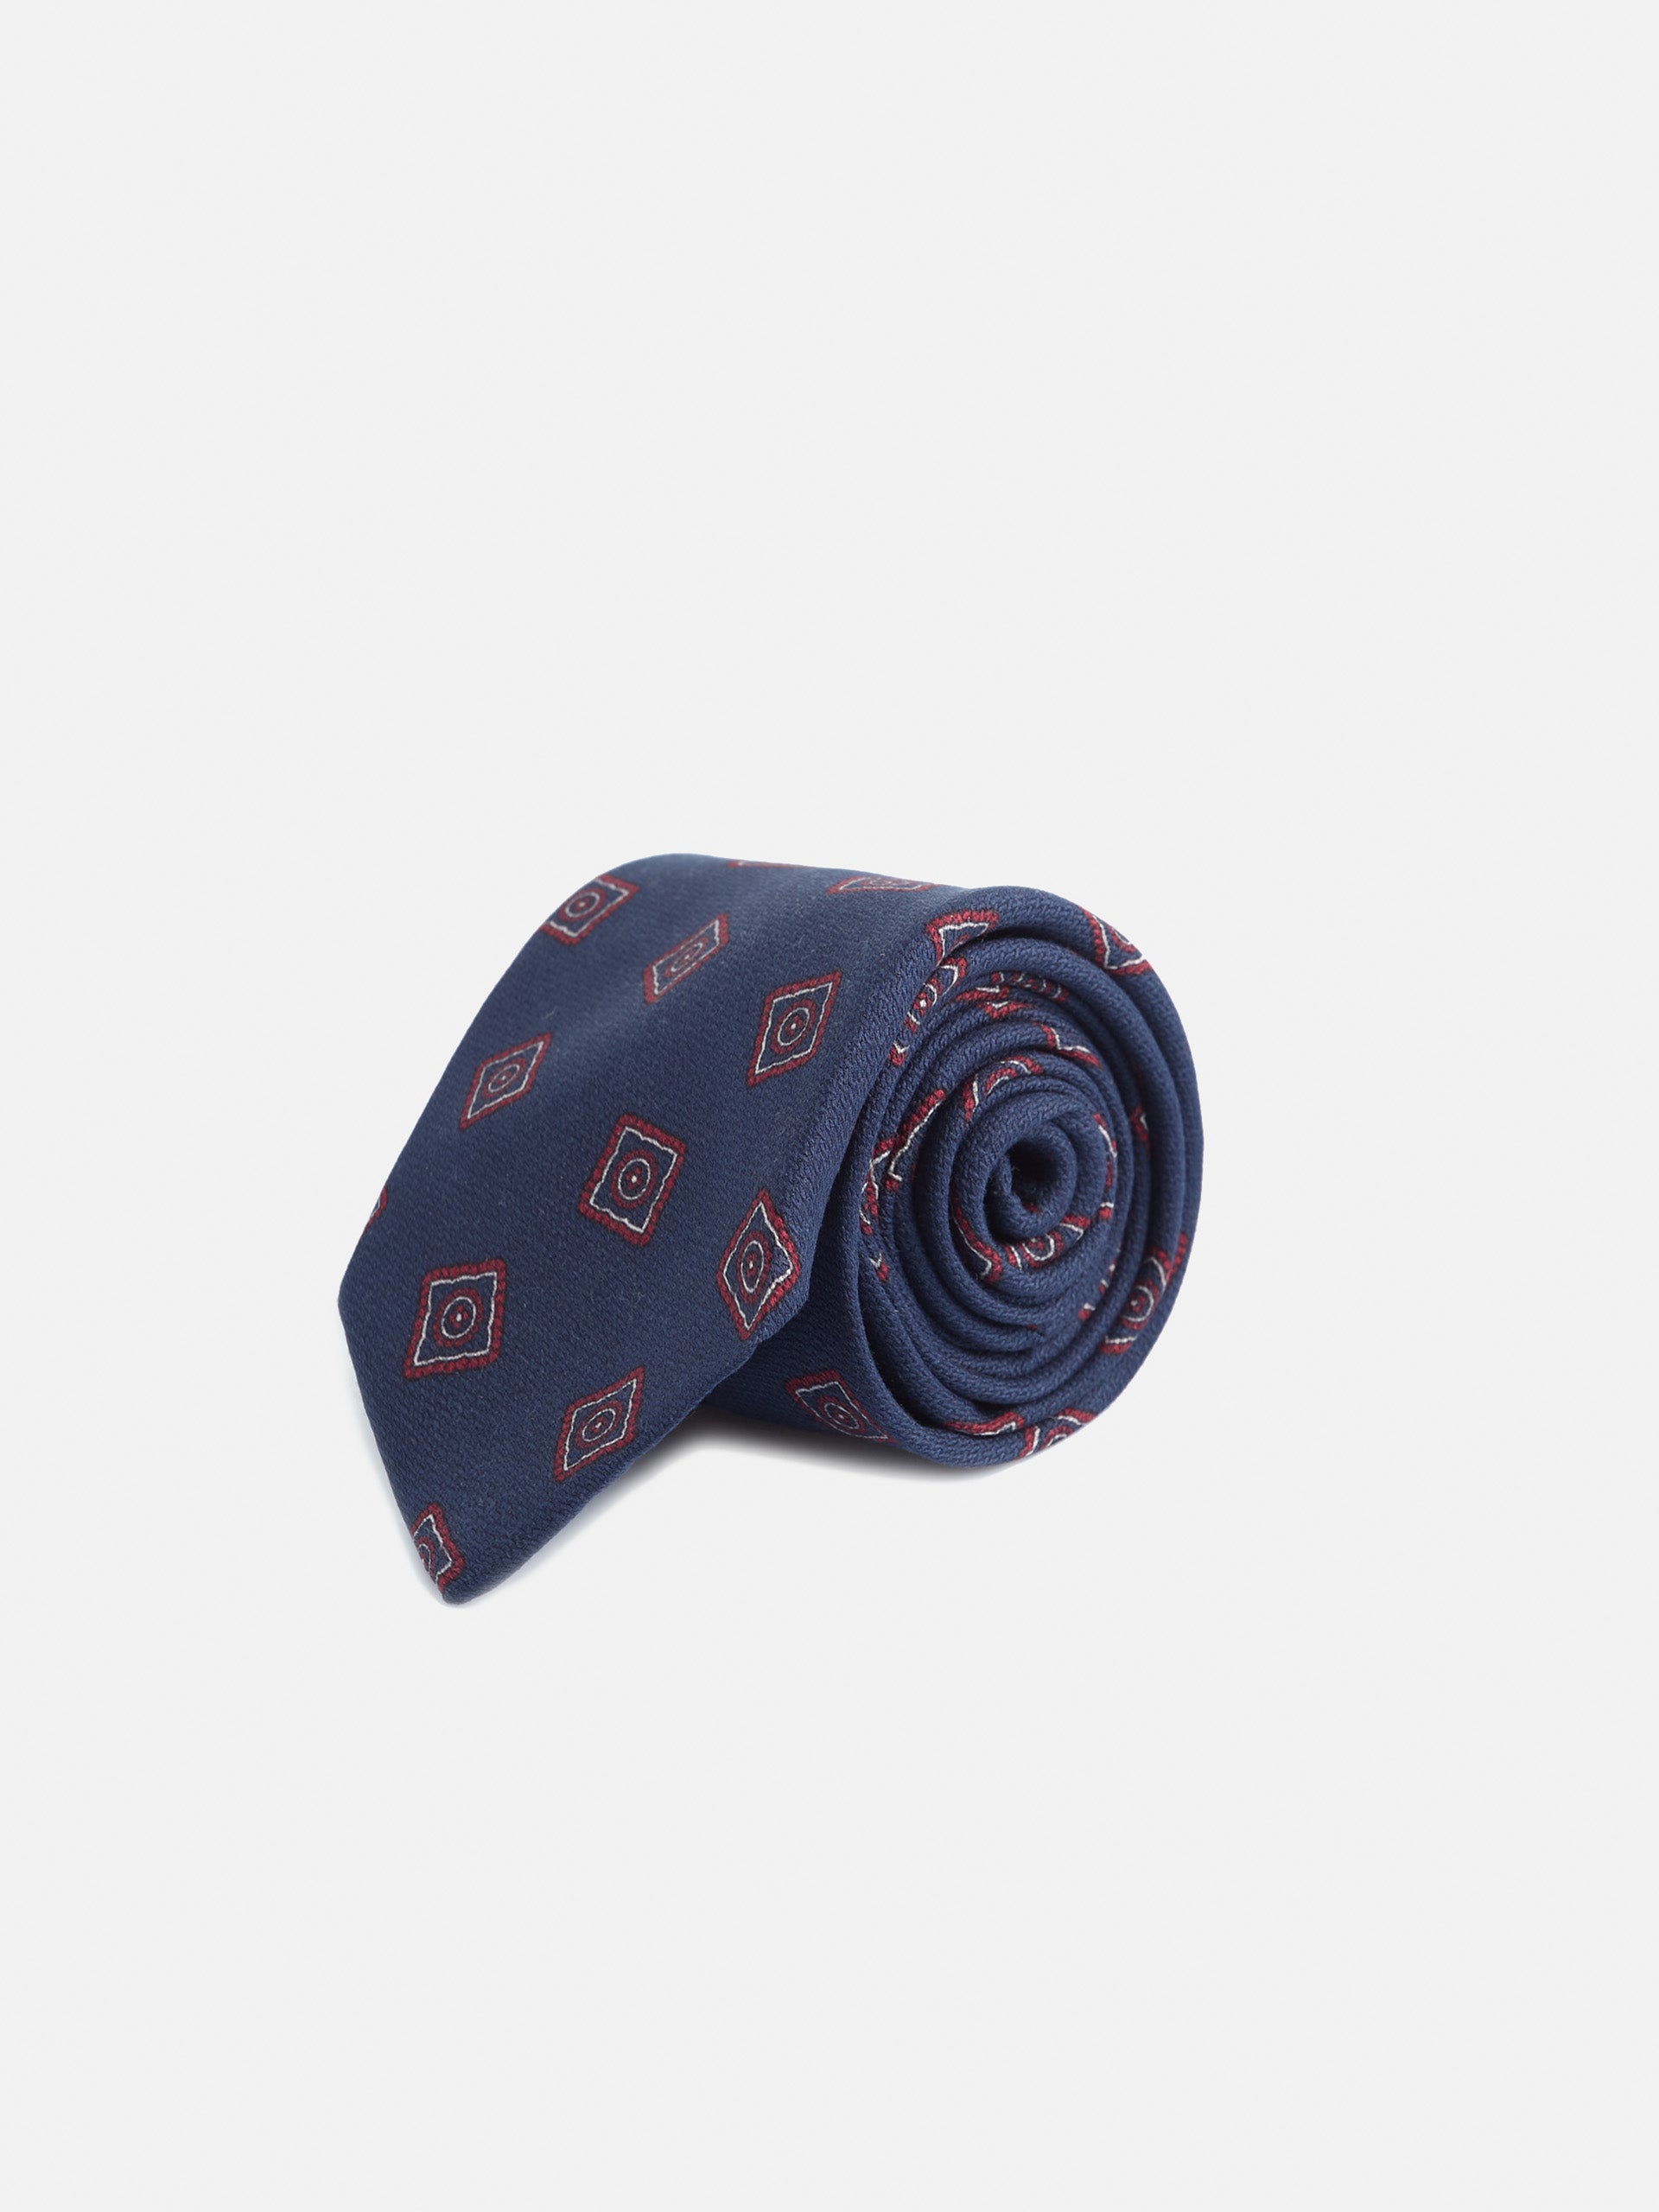 Cravate bleu marine imprimé irrégulier